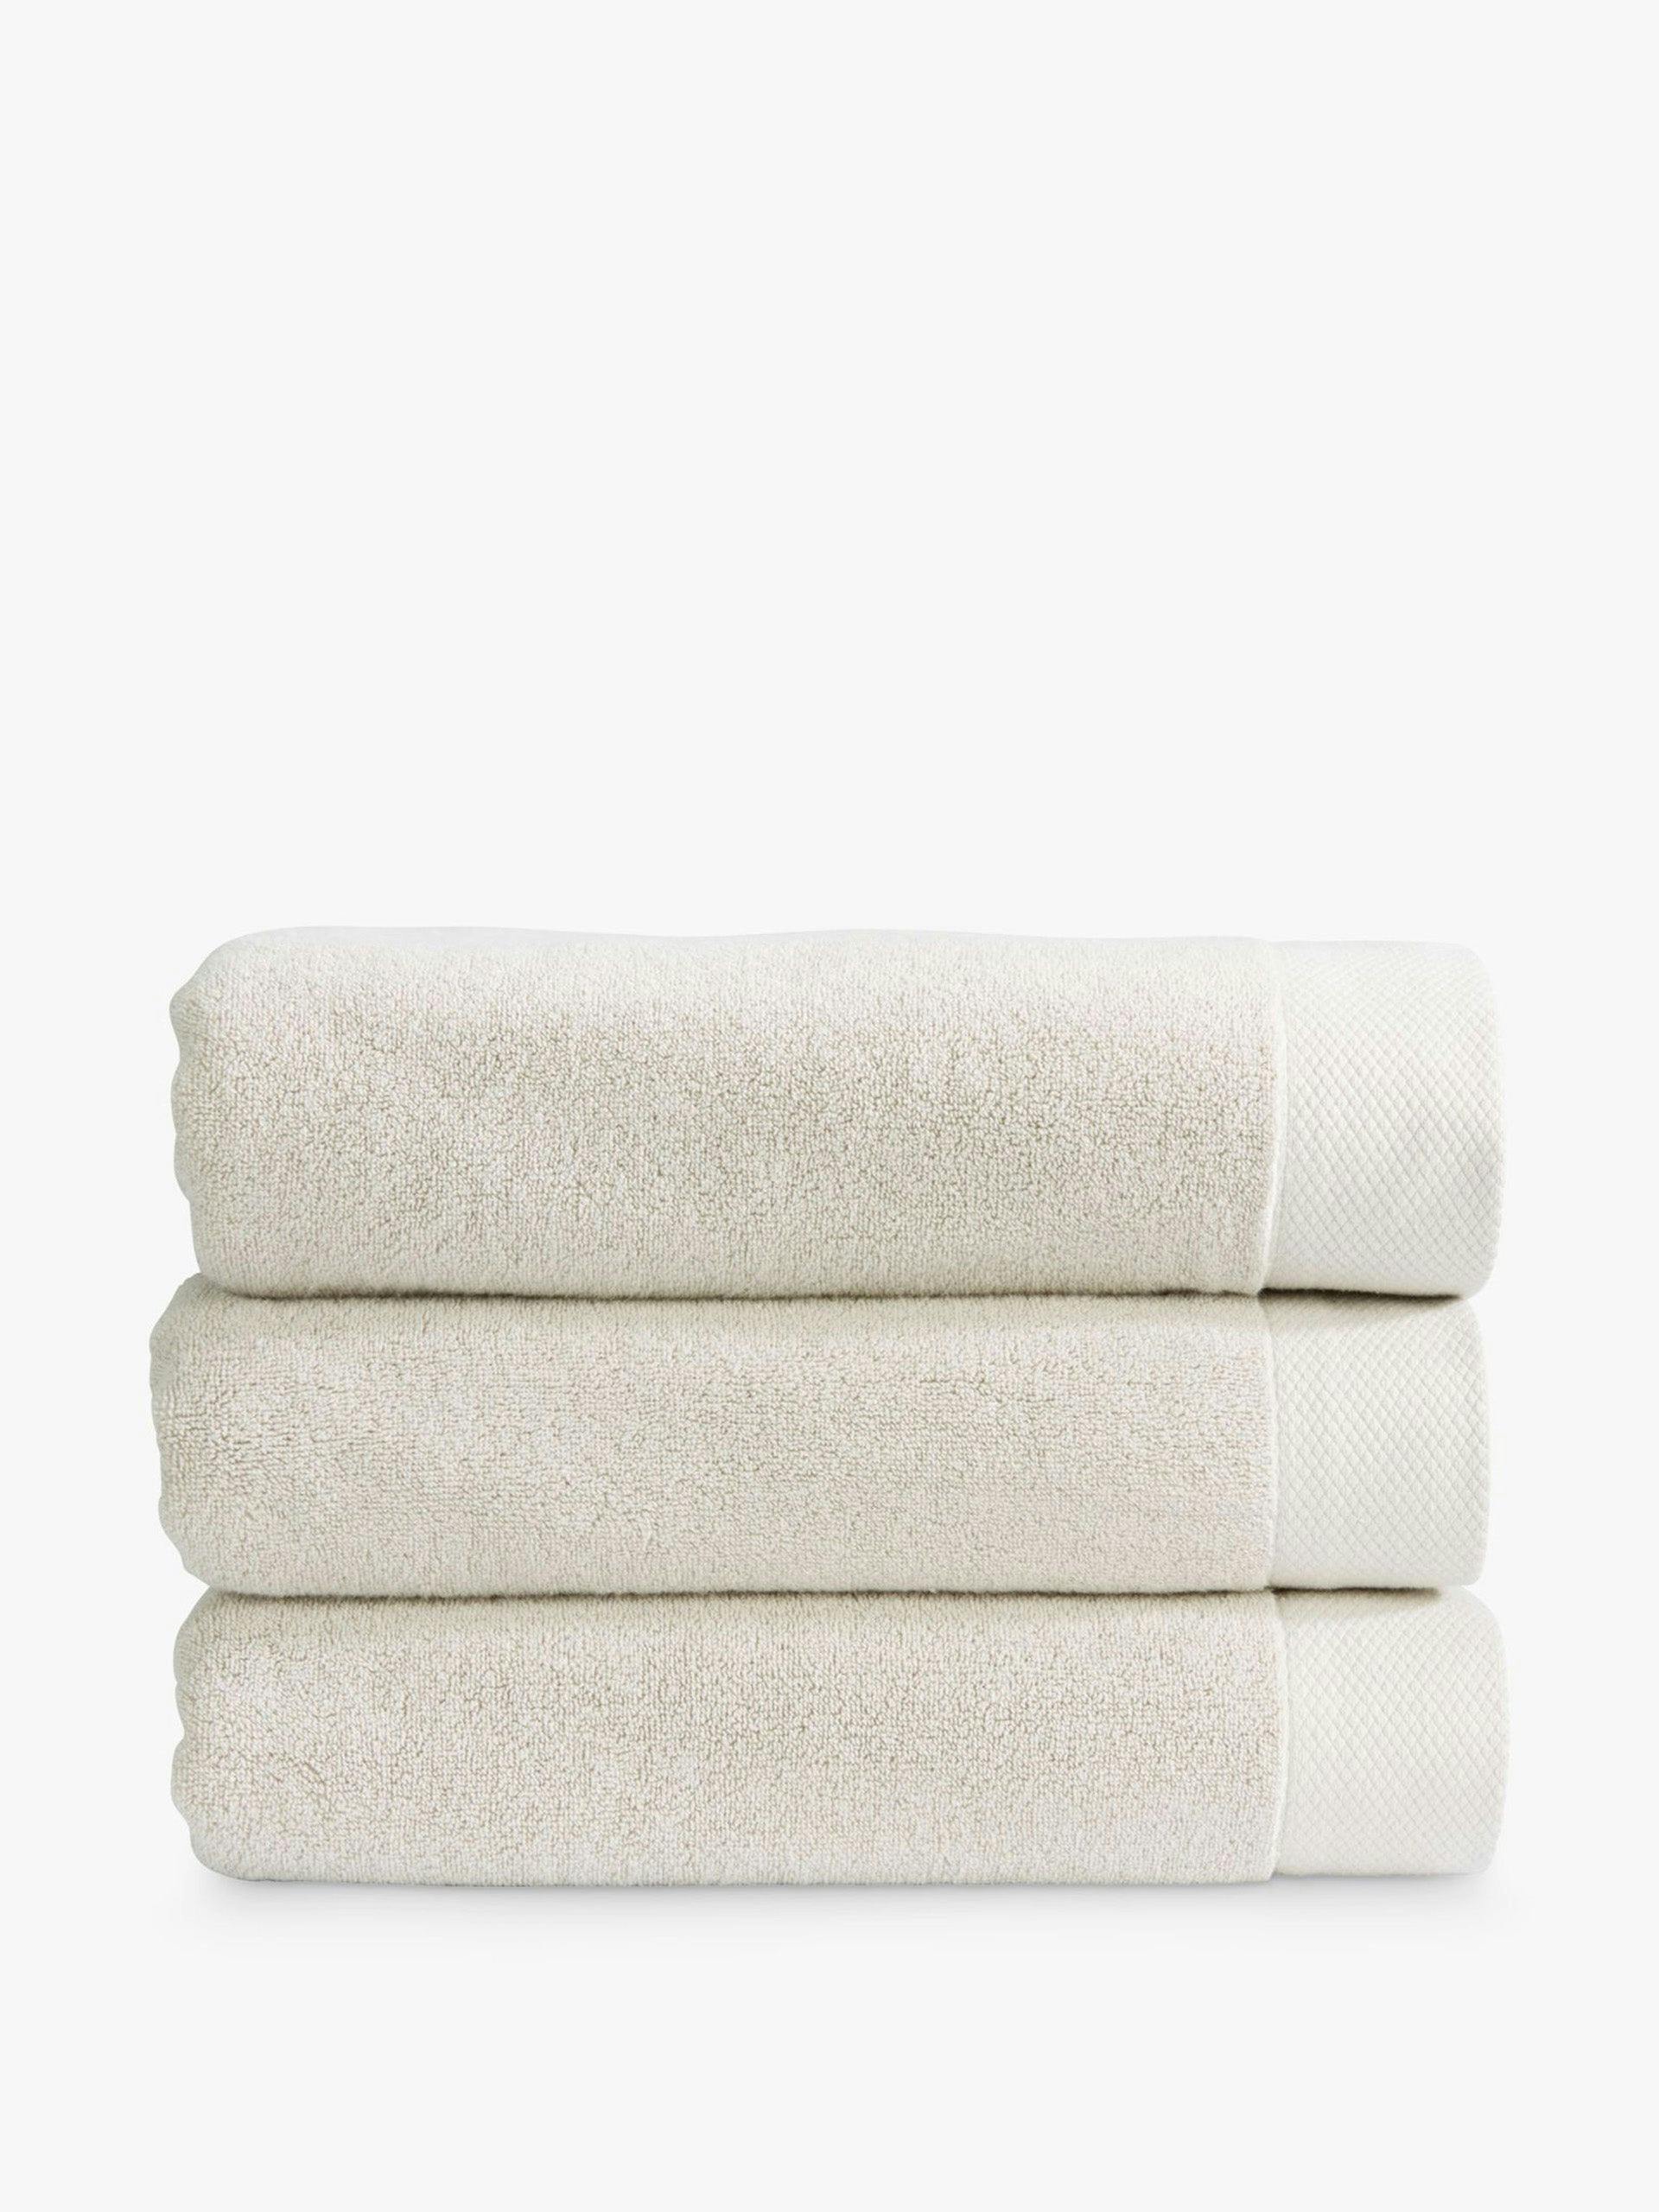 Grey Turkish cotton bath towel